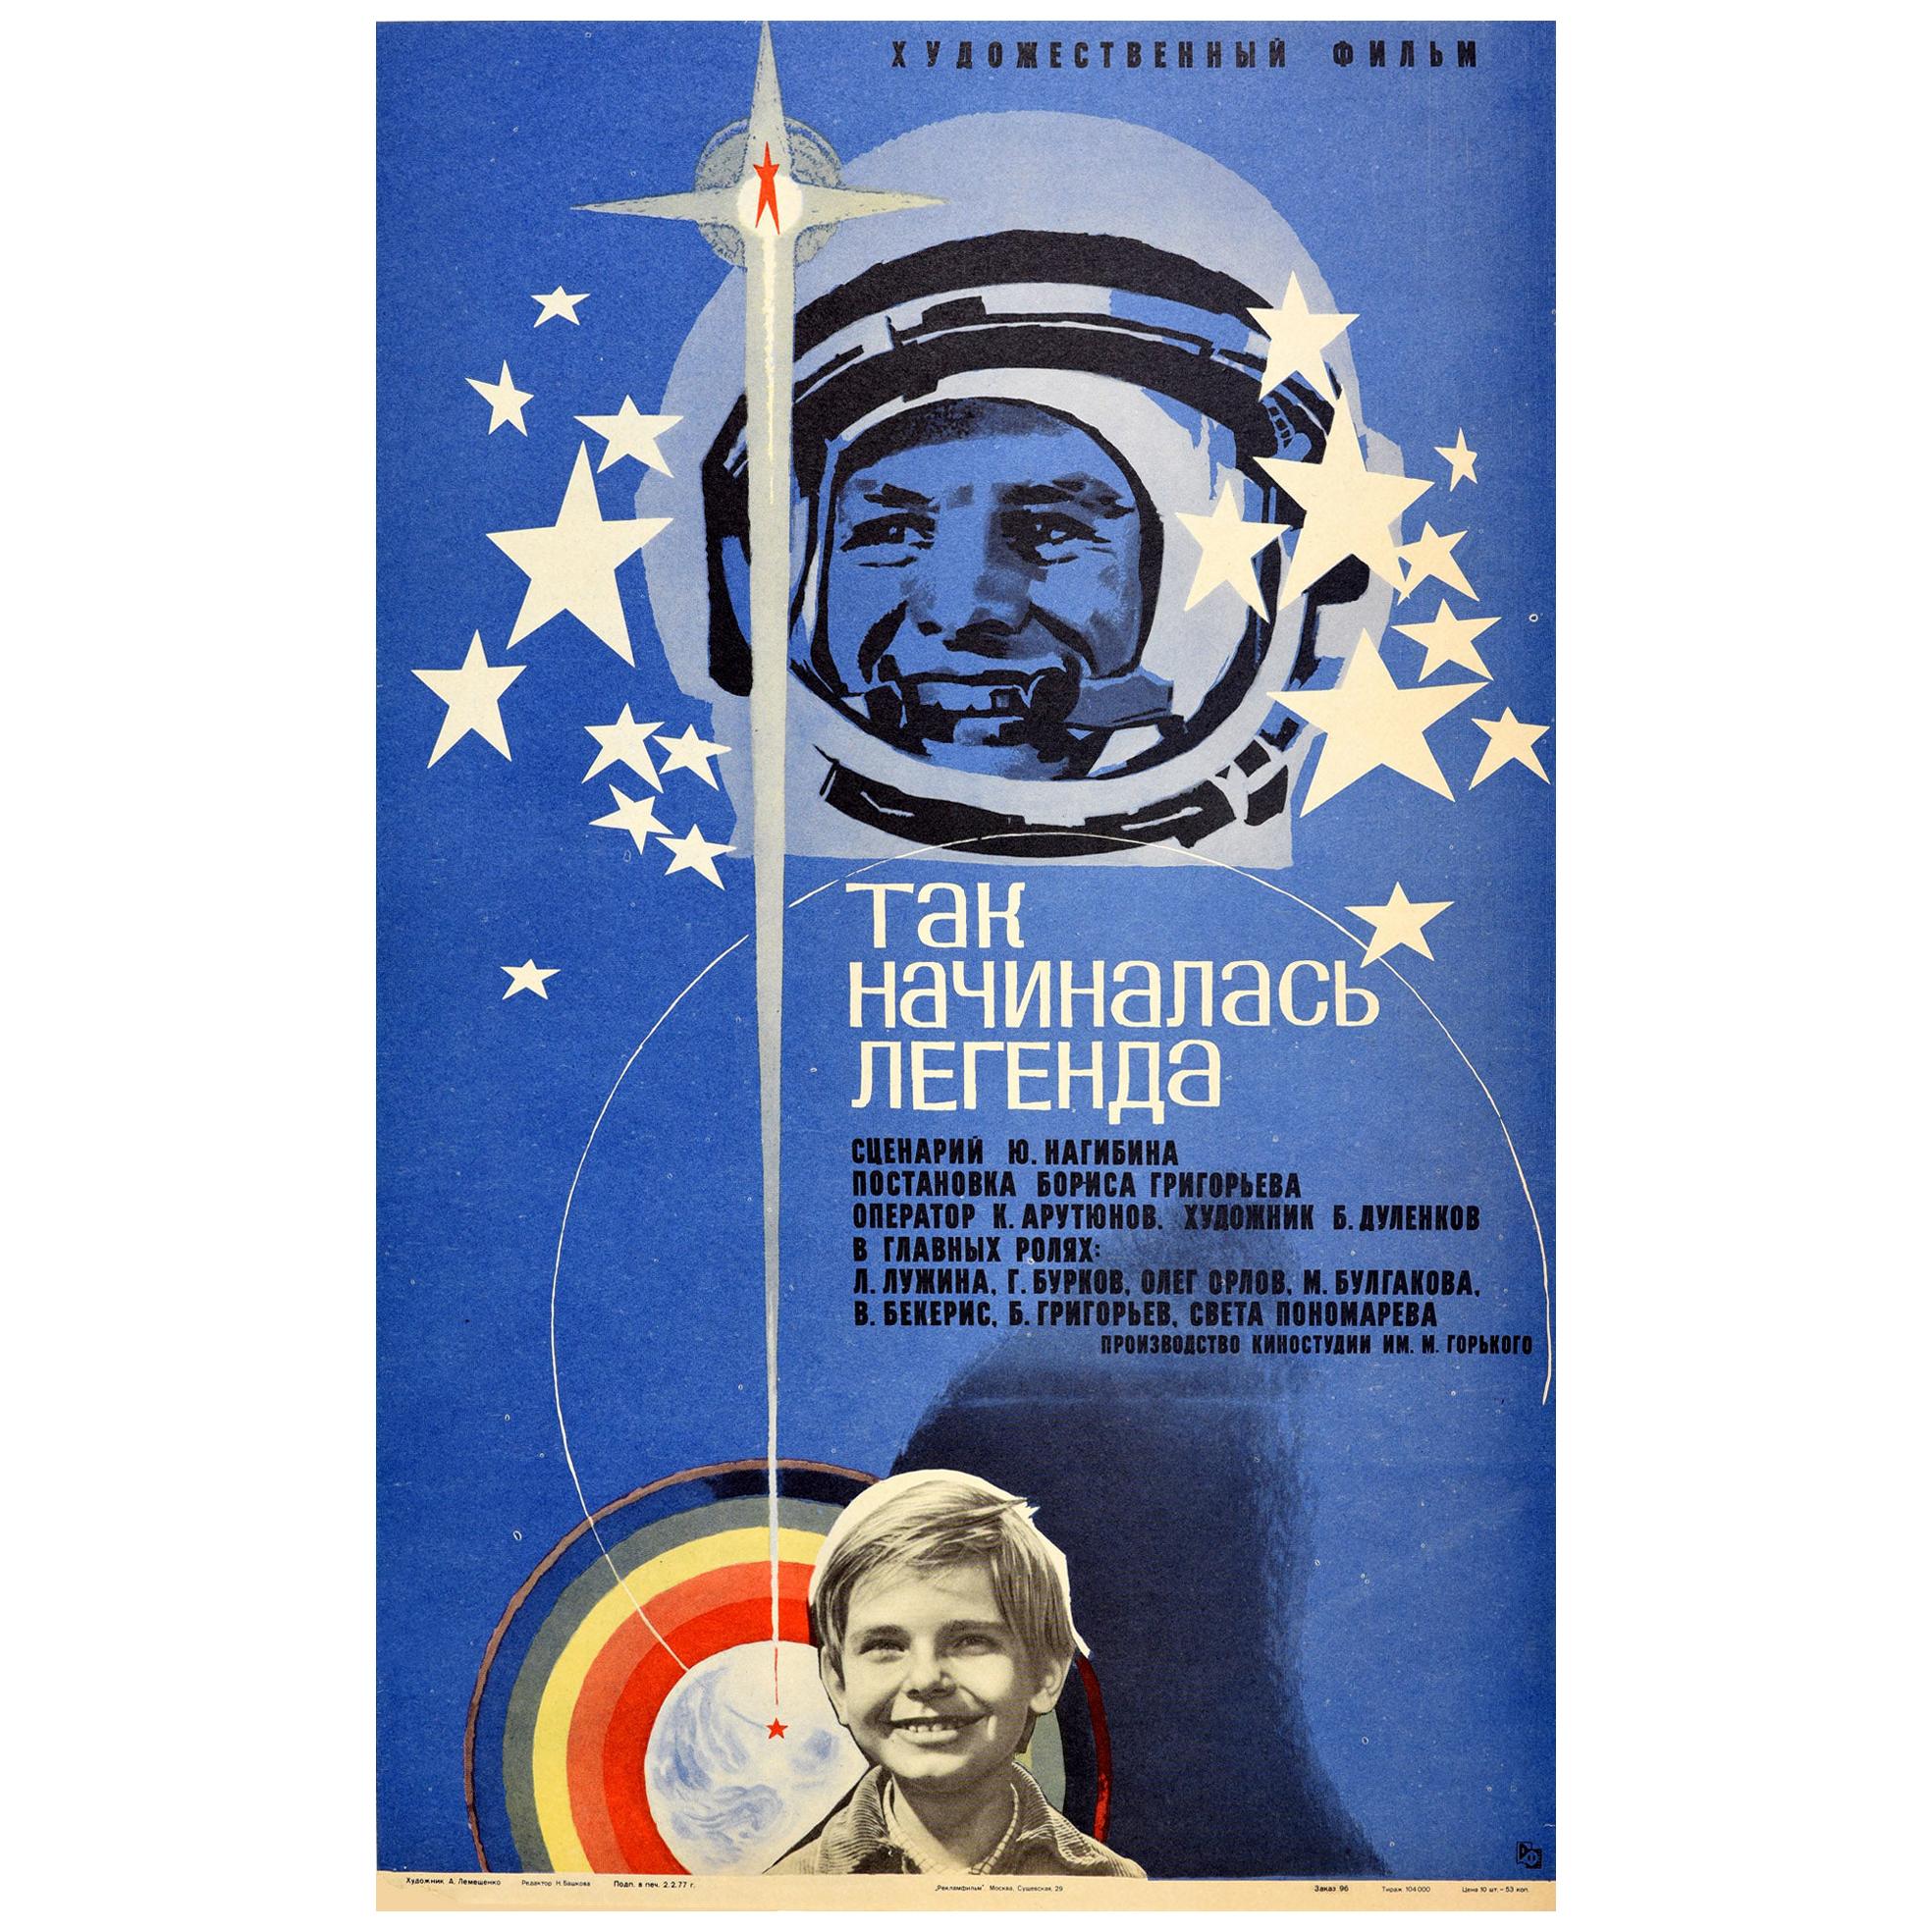 Original Vintage Film Poster How The Legend Began Yuri Gagarin Cosmonaut Pilot For Sale